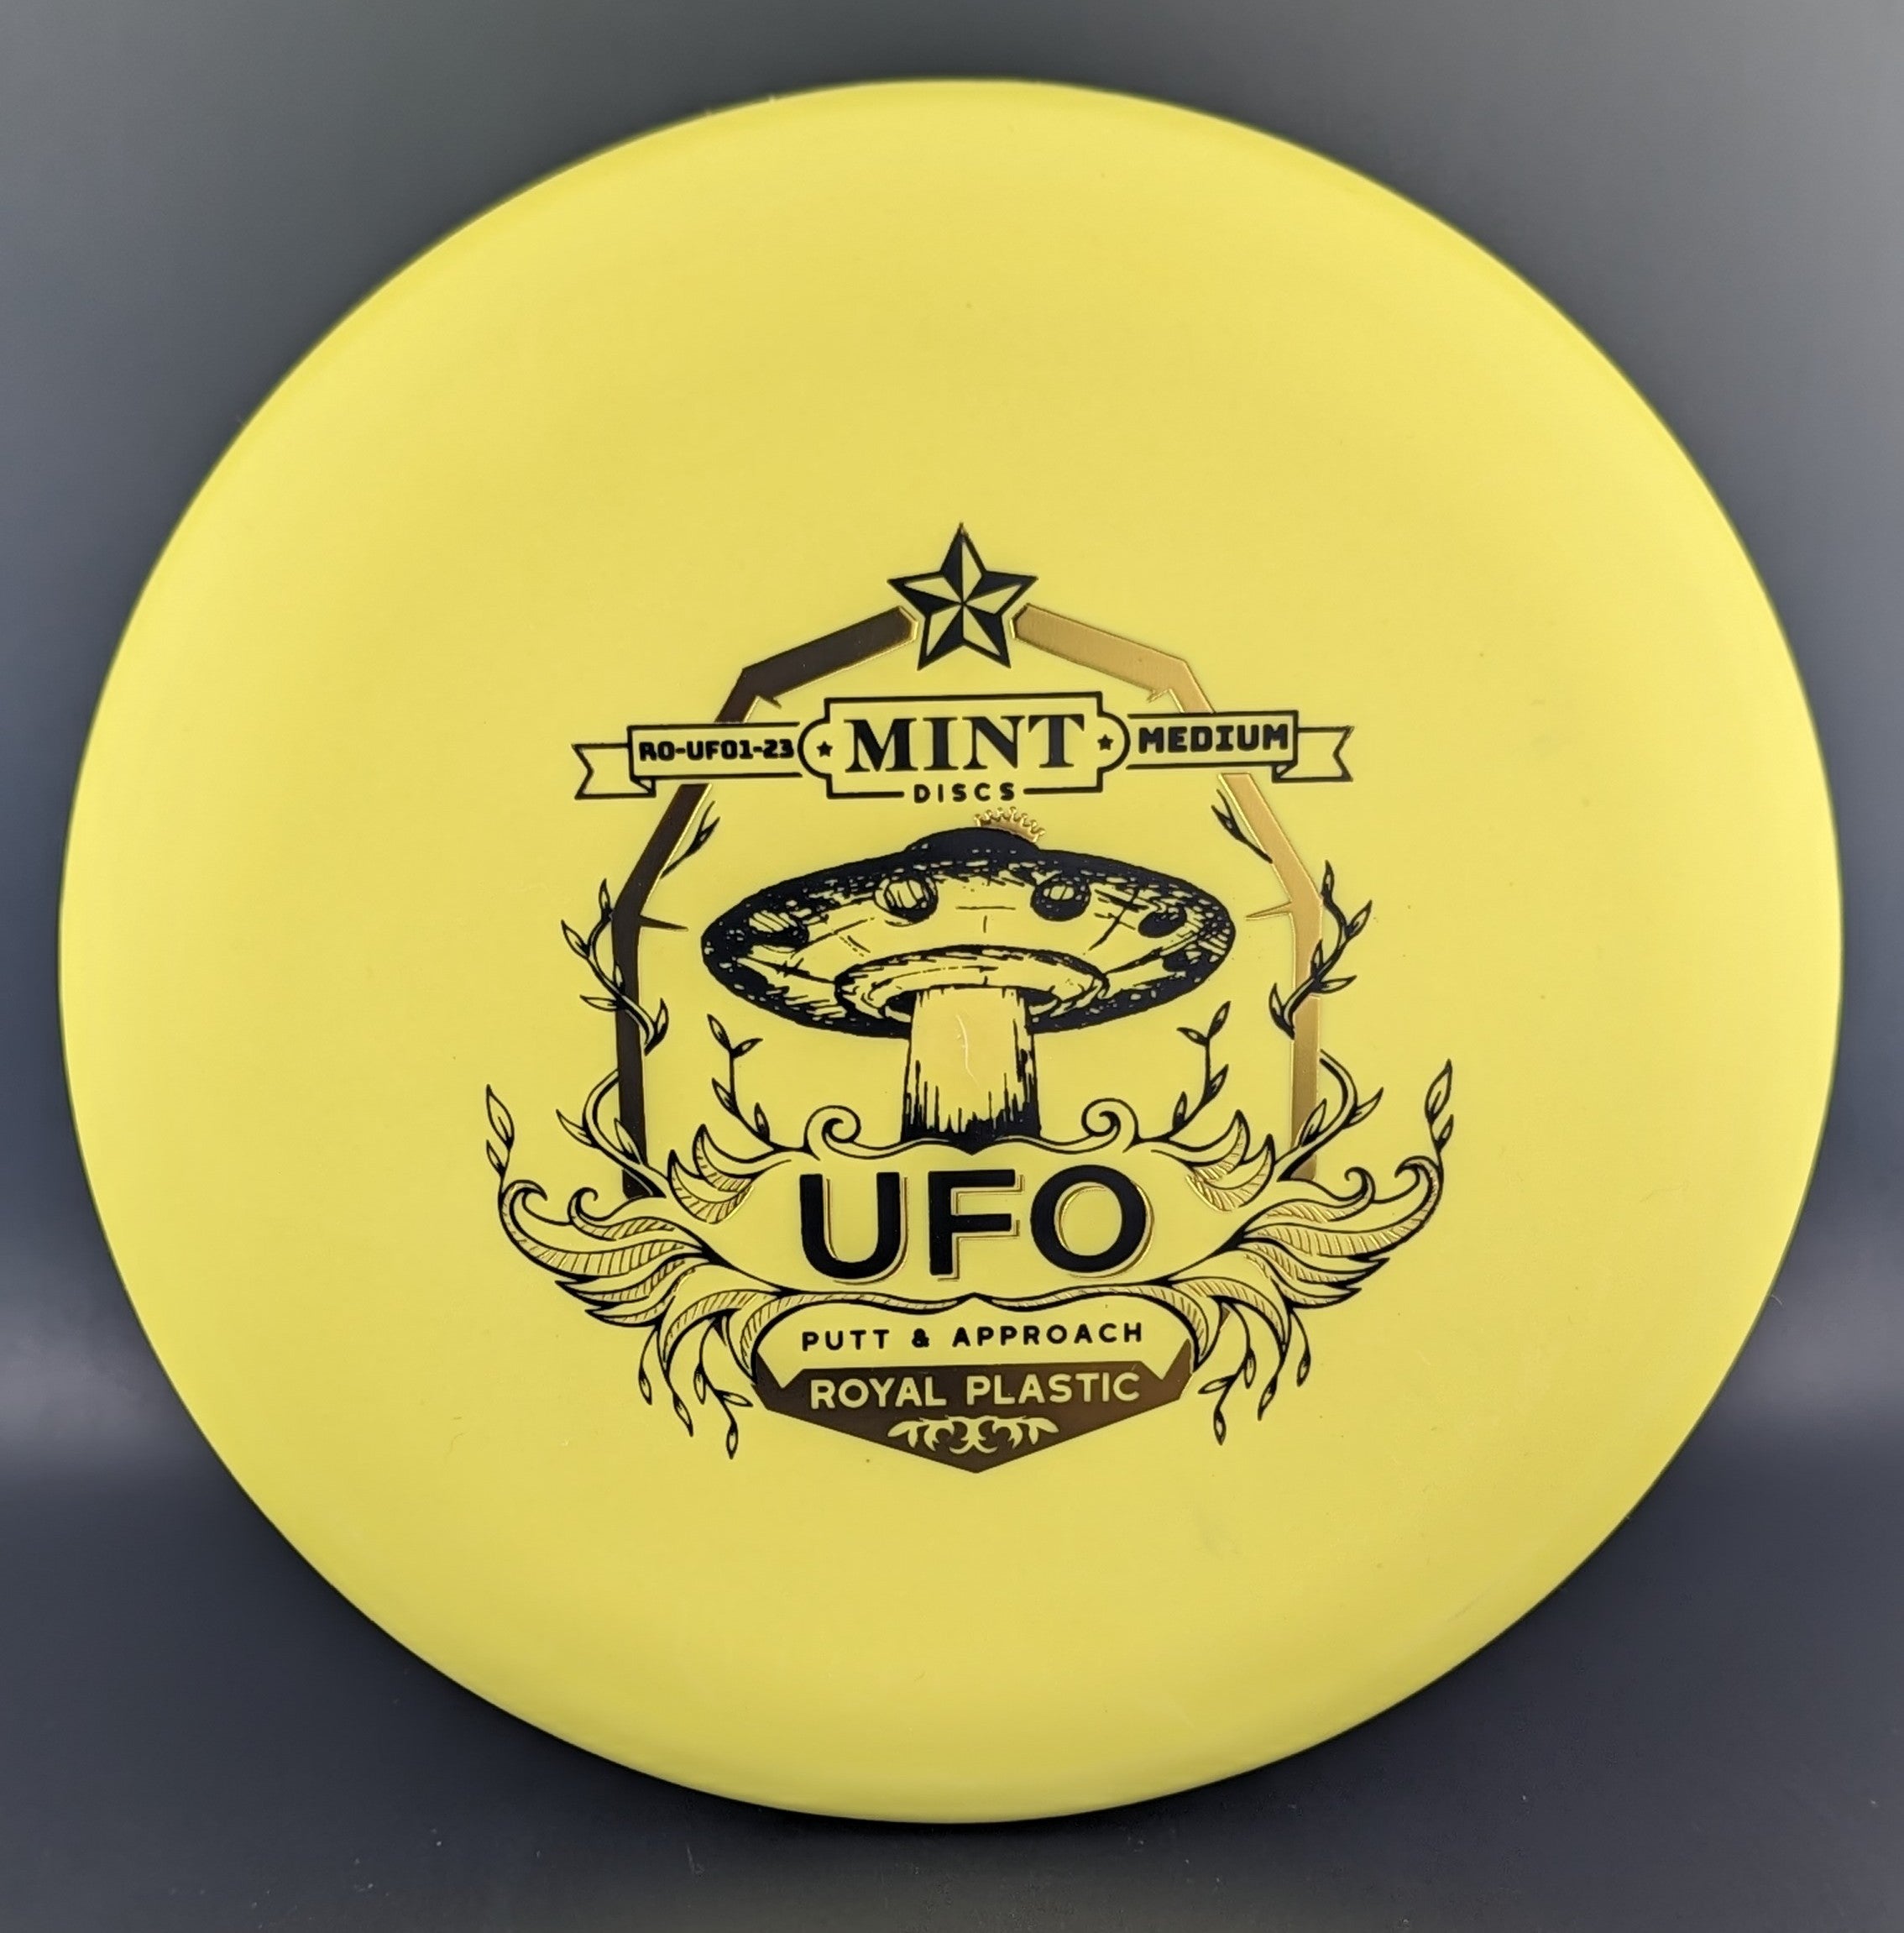 Mint Discs Royal UFO Medium - 0